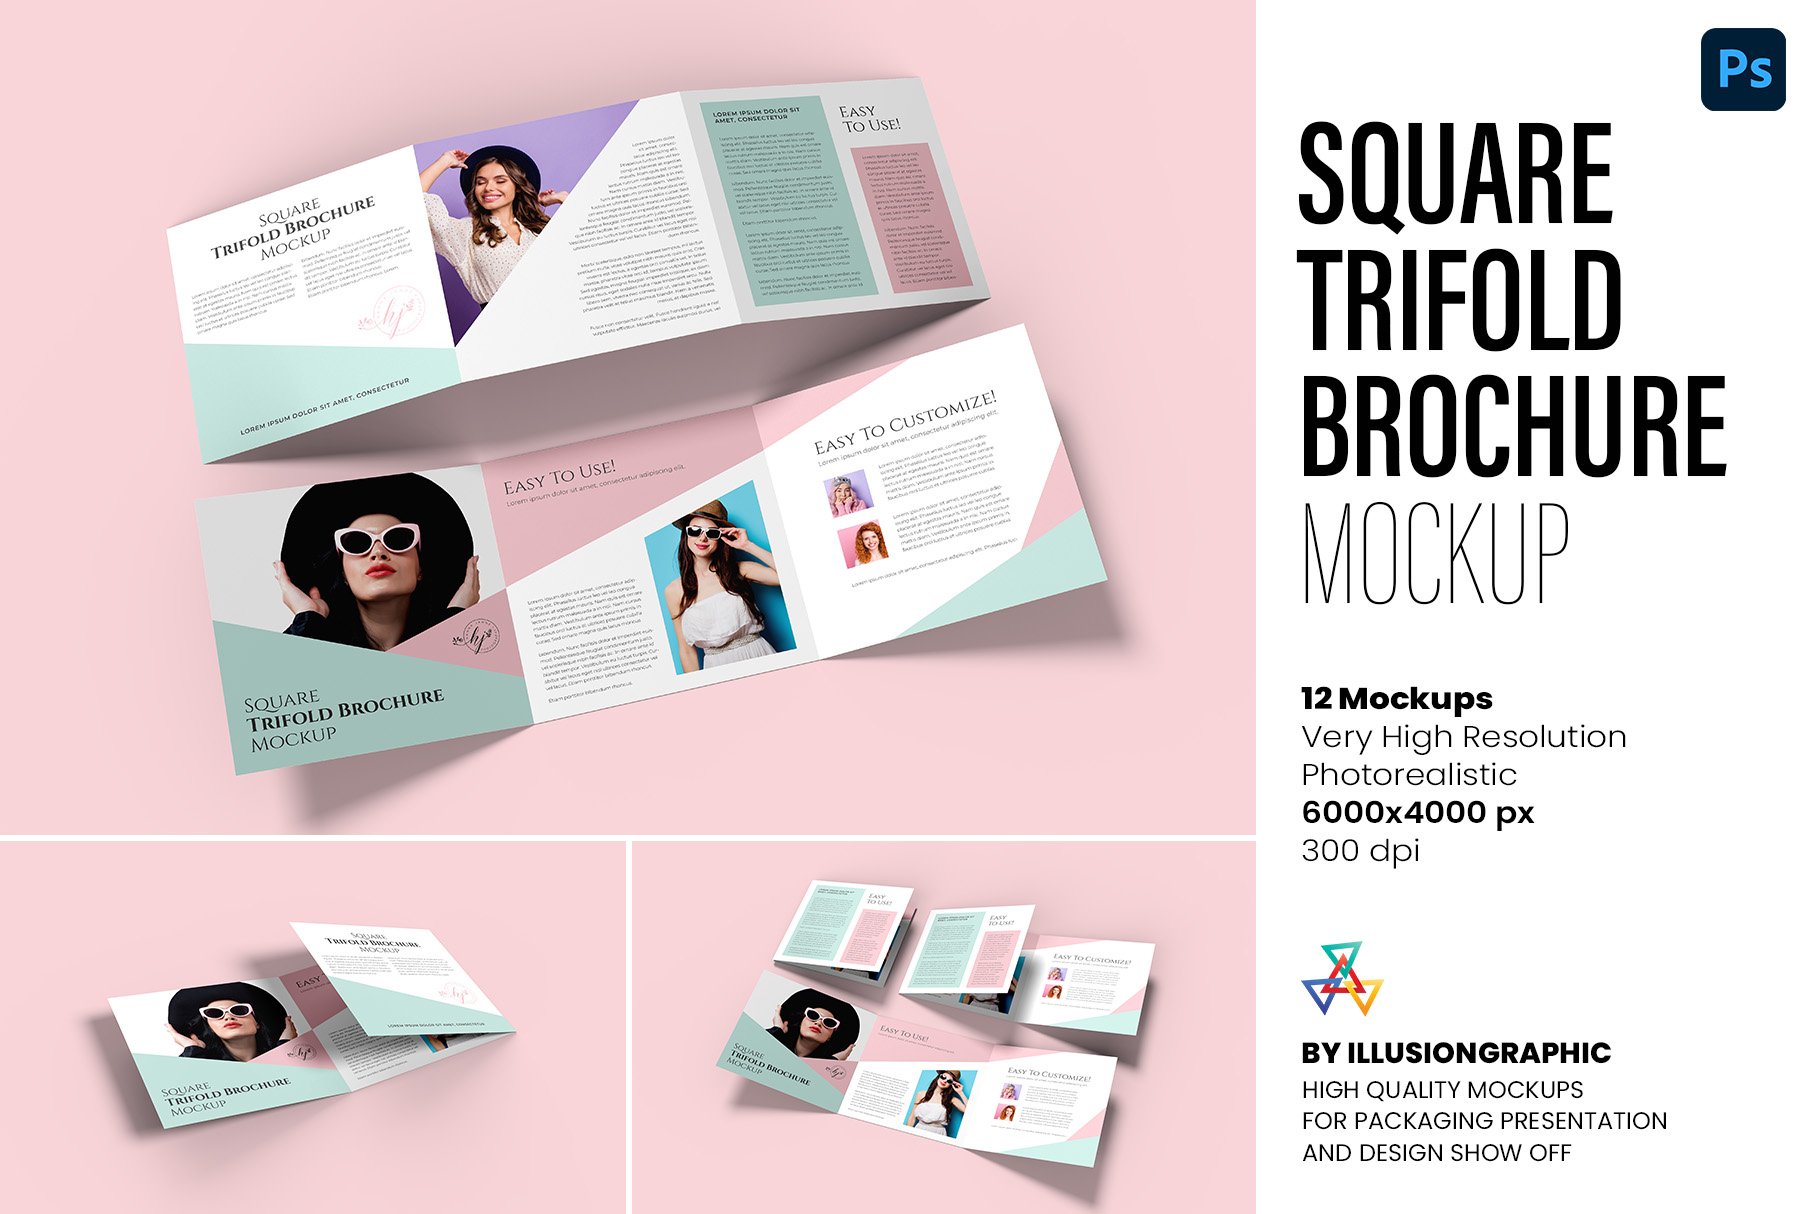 Square Trifold Brochure Mockup cover image.